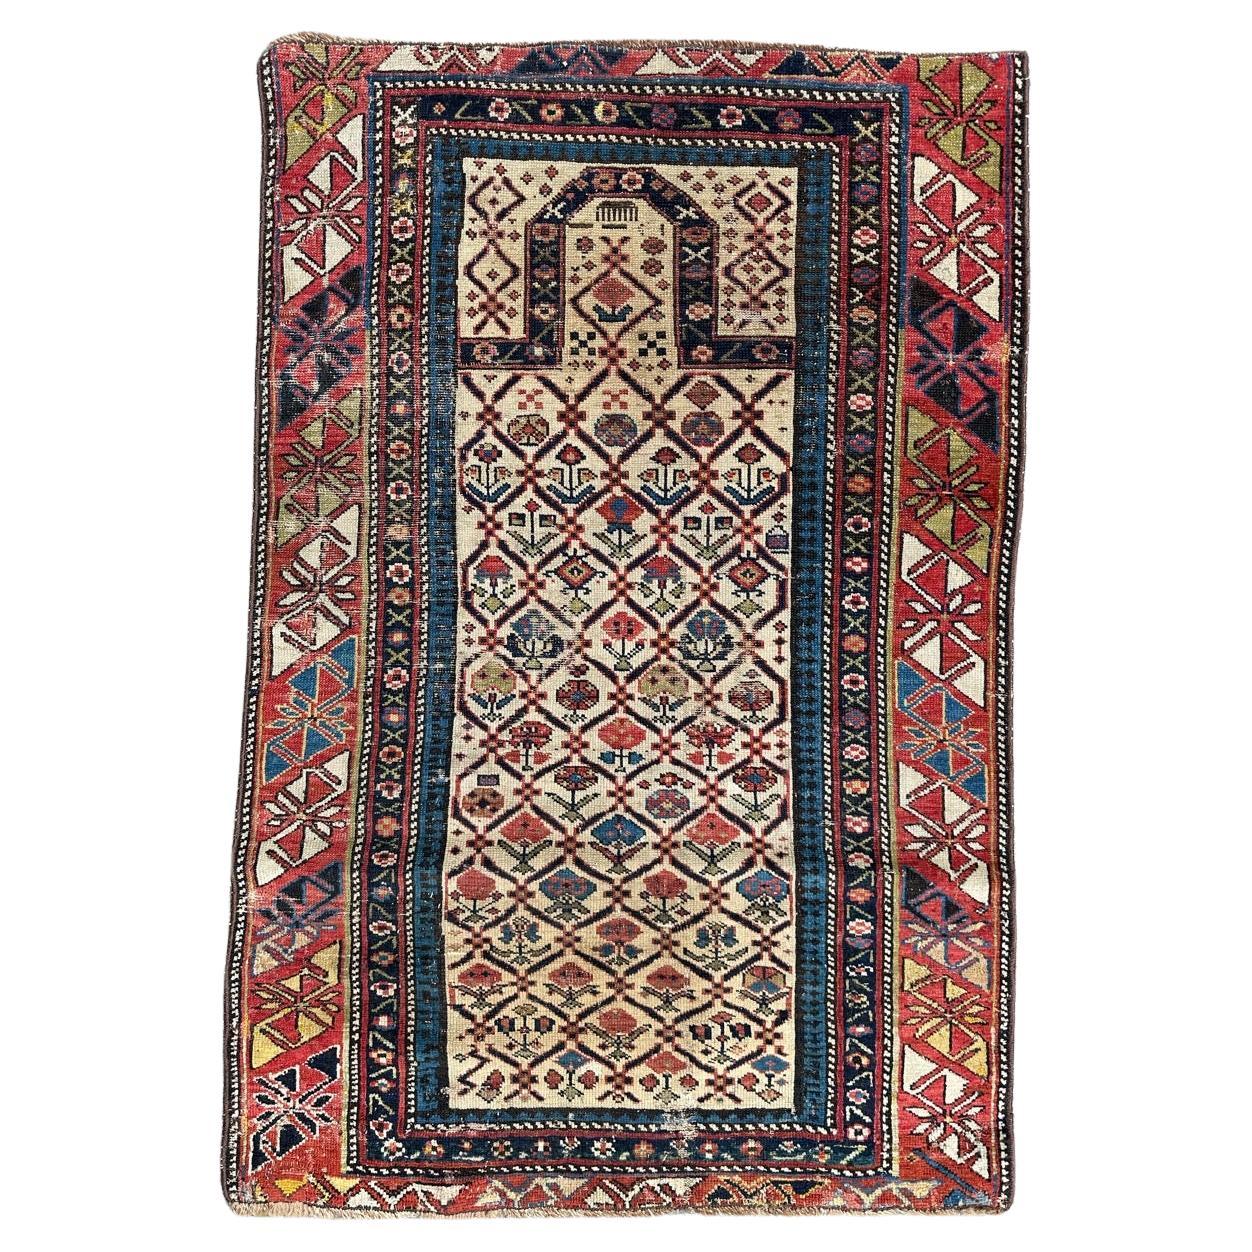 Bobyrug’s Beautiful little antique shirvan daghistan rug 